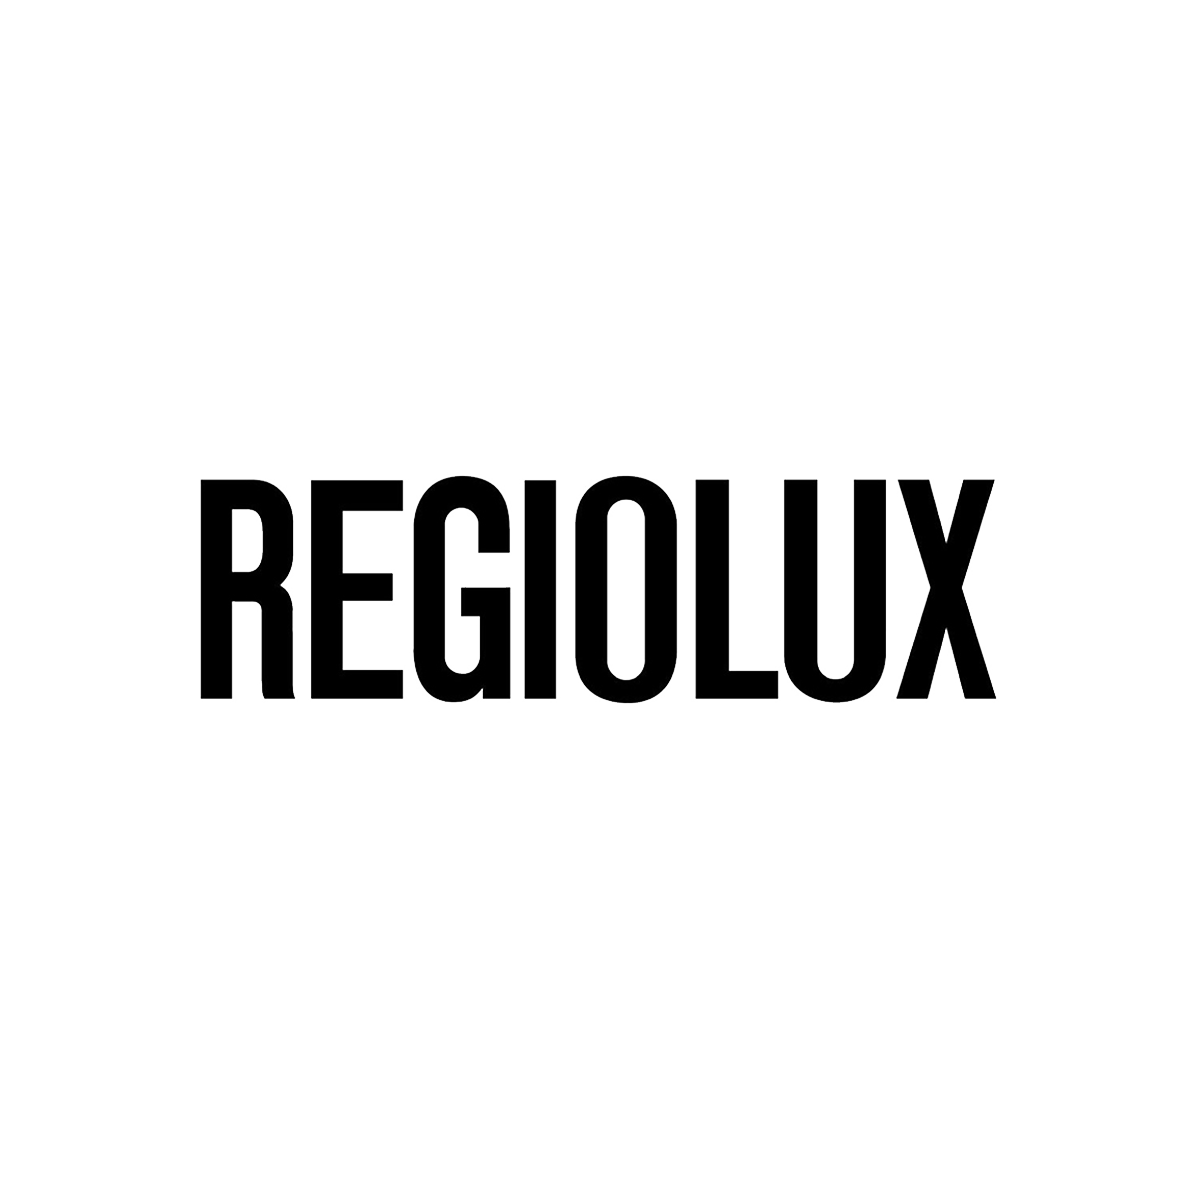 Regiolux